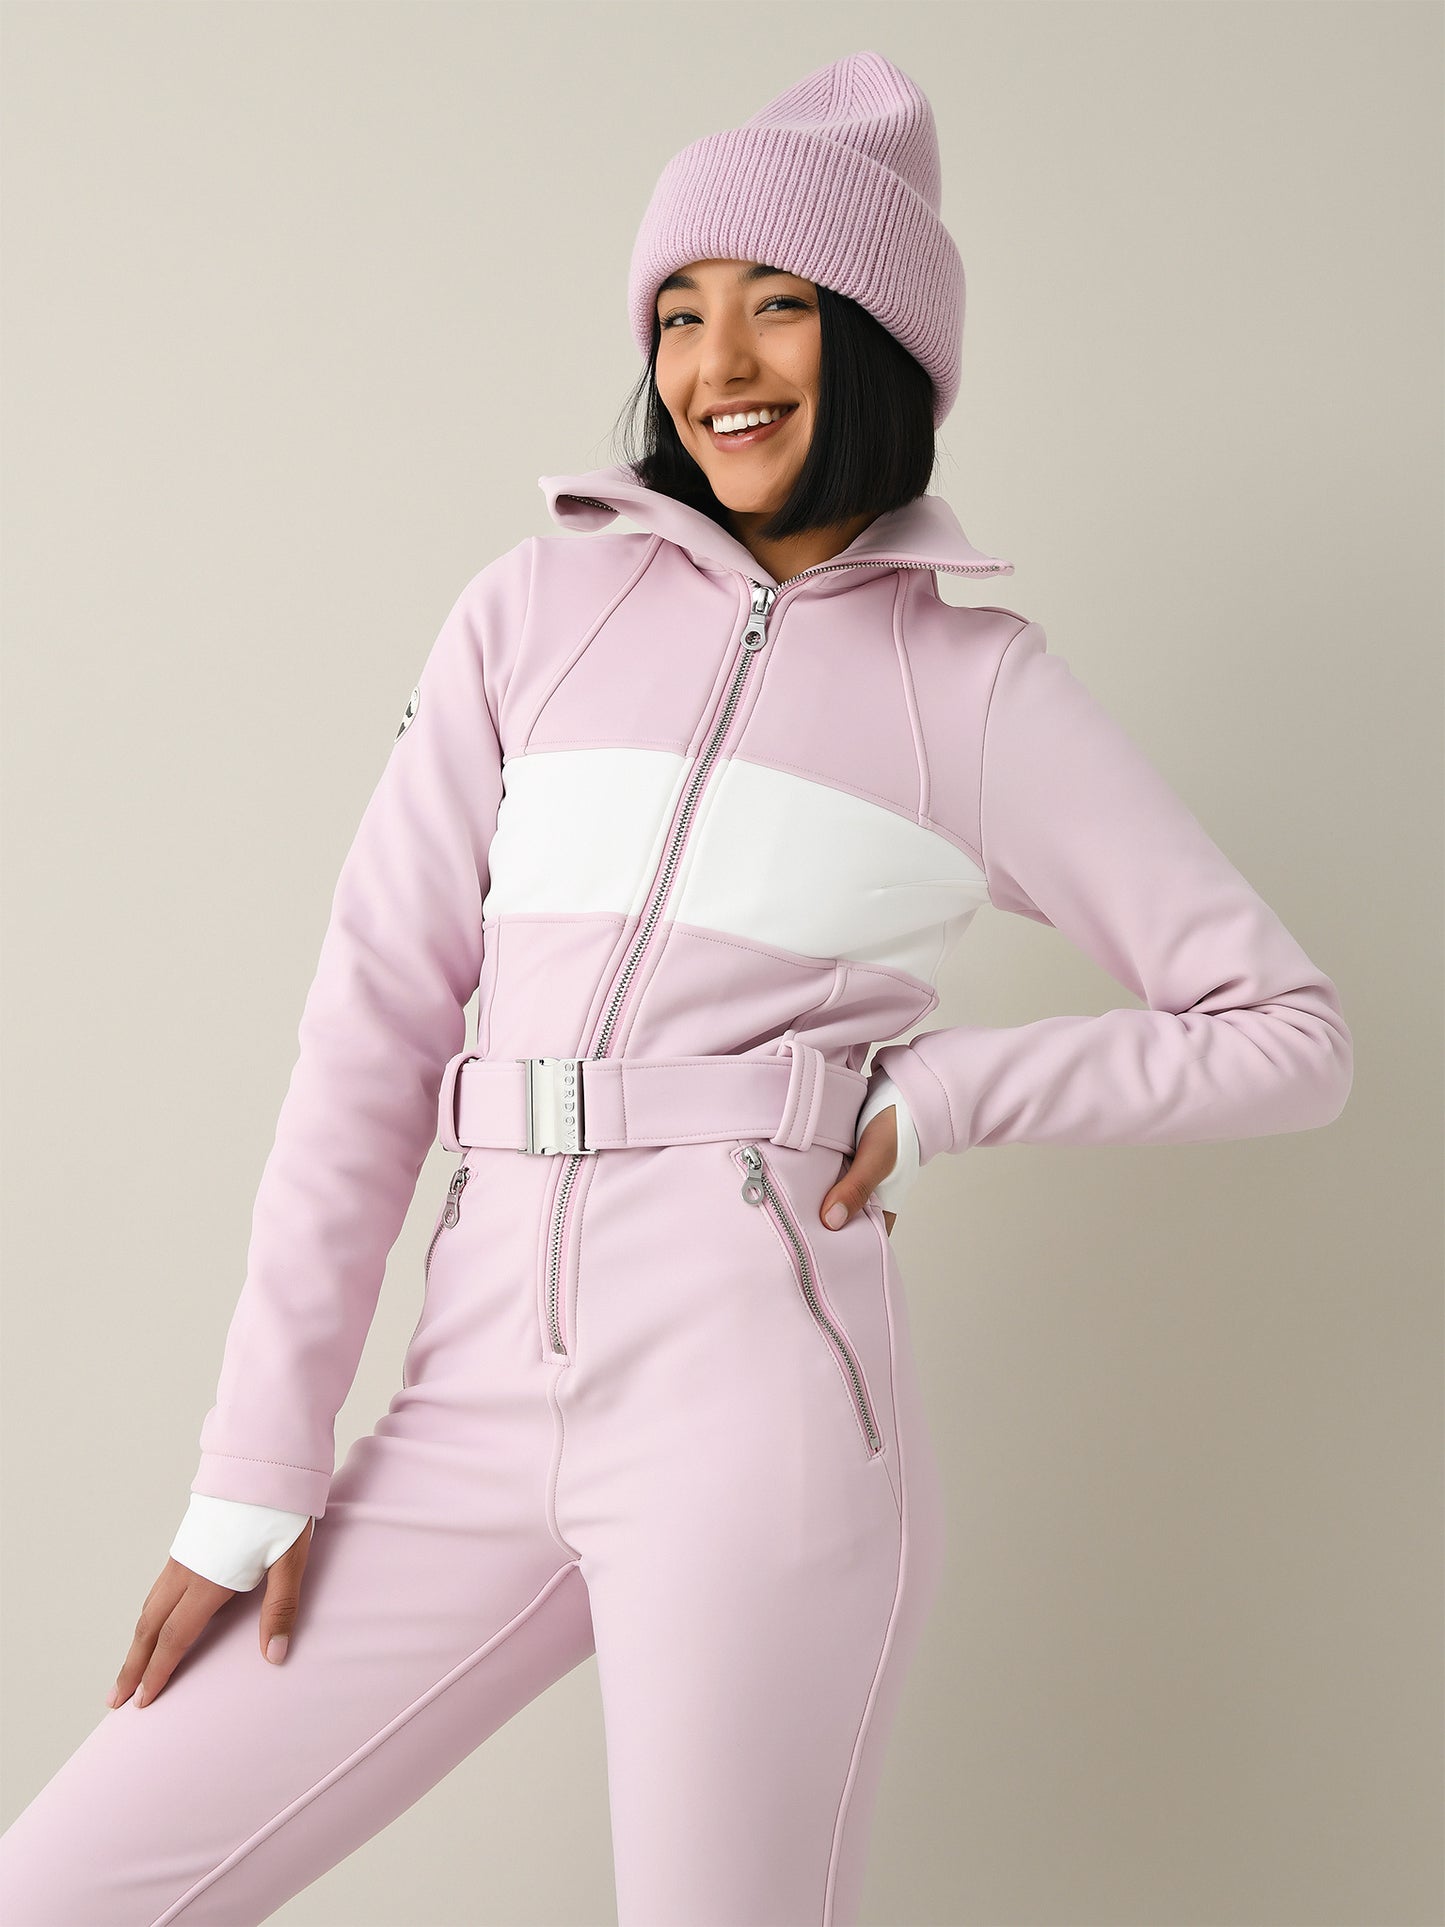 Cordova Women's Fora Ski Suit